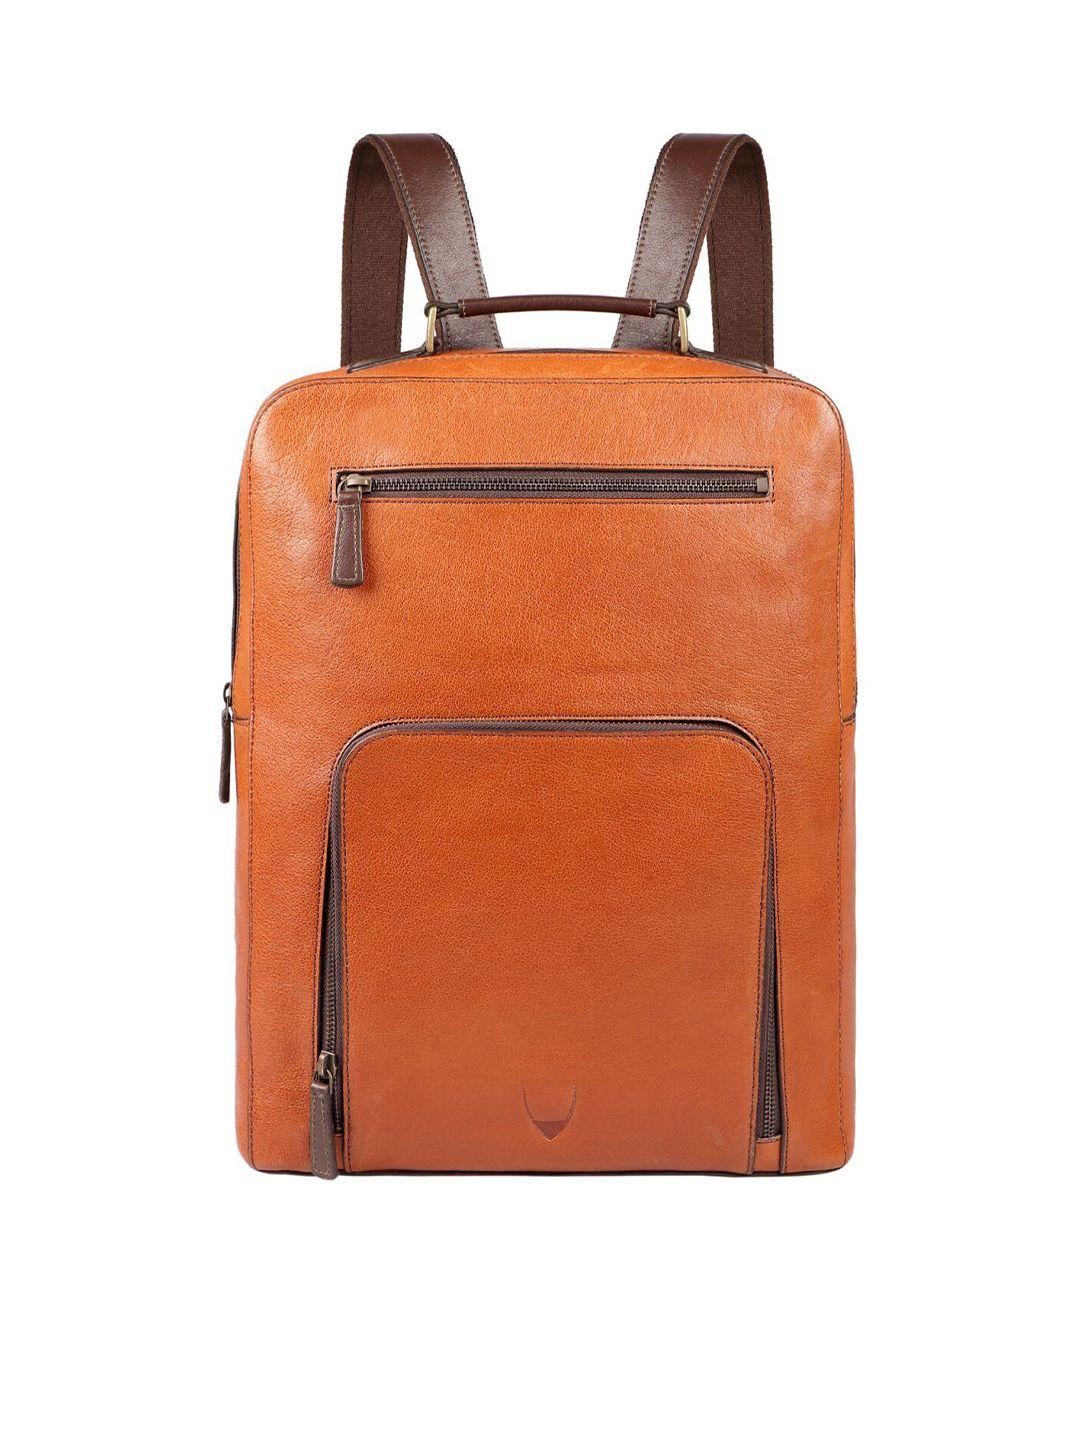 hidesign women tan & brown textured backpack